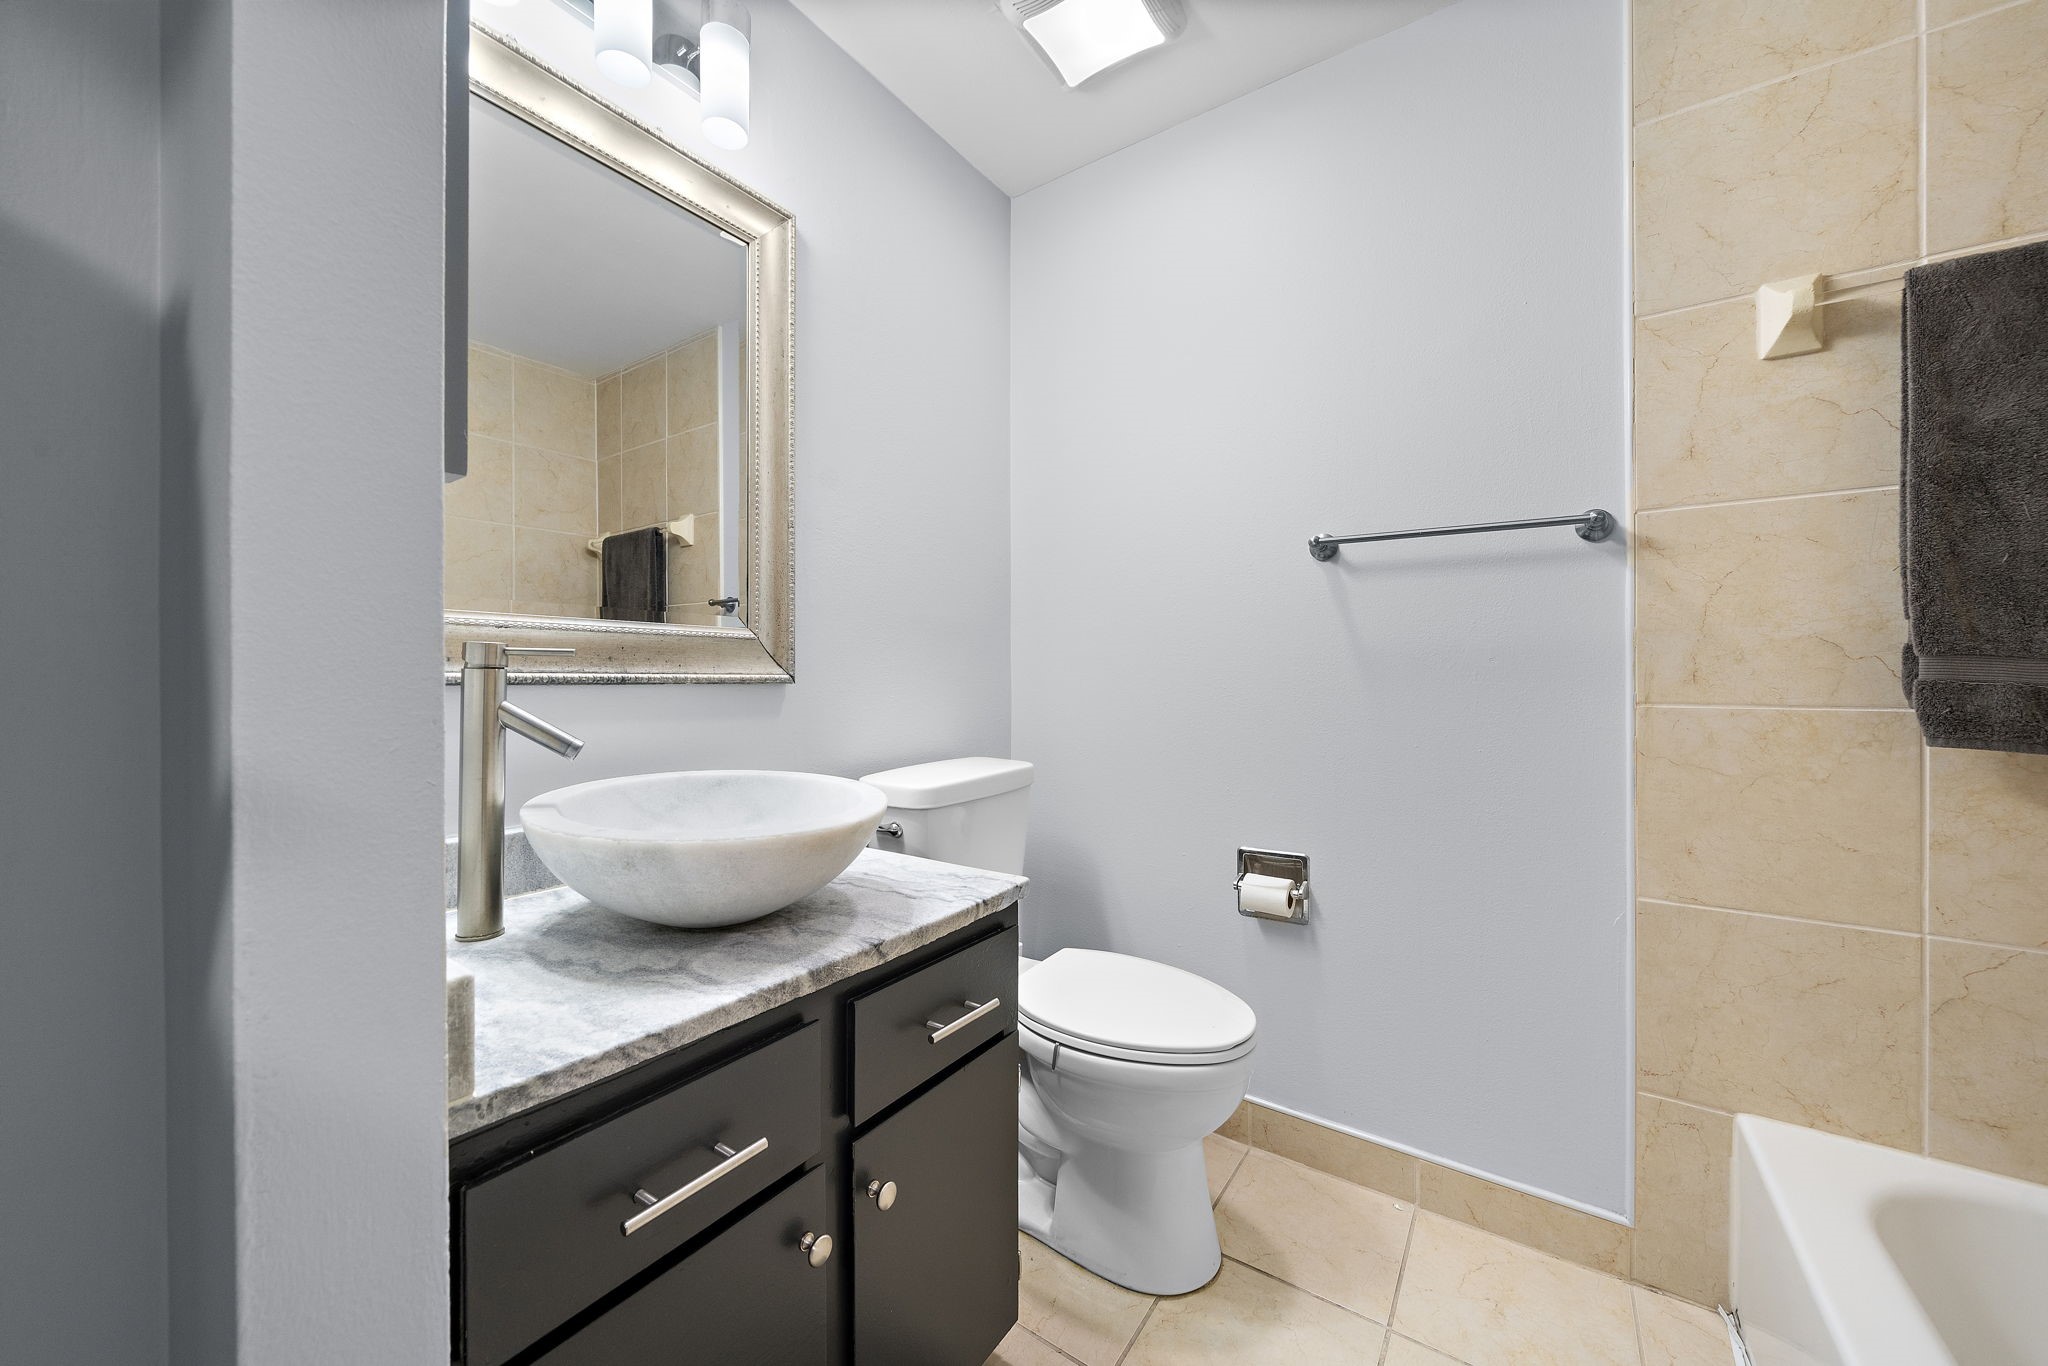 Modern bathroom with a vessel sink, granite vanity, tiled walls, and recessed lighting.